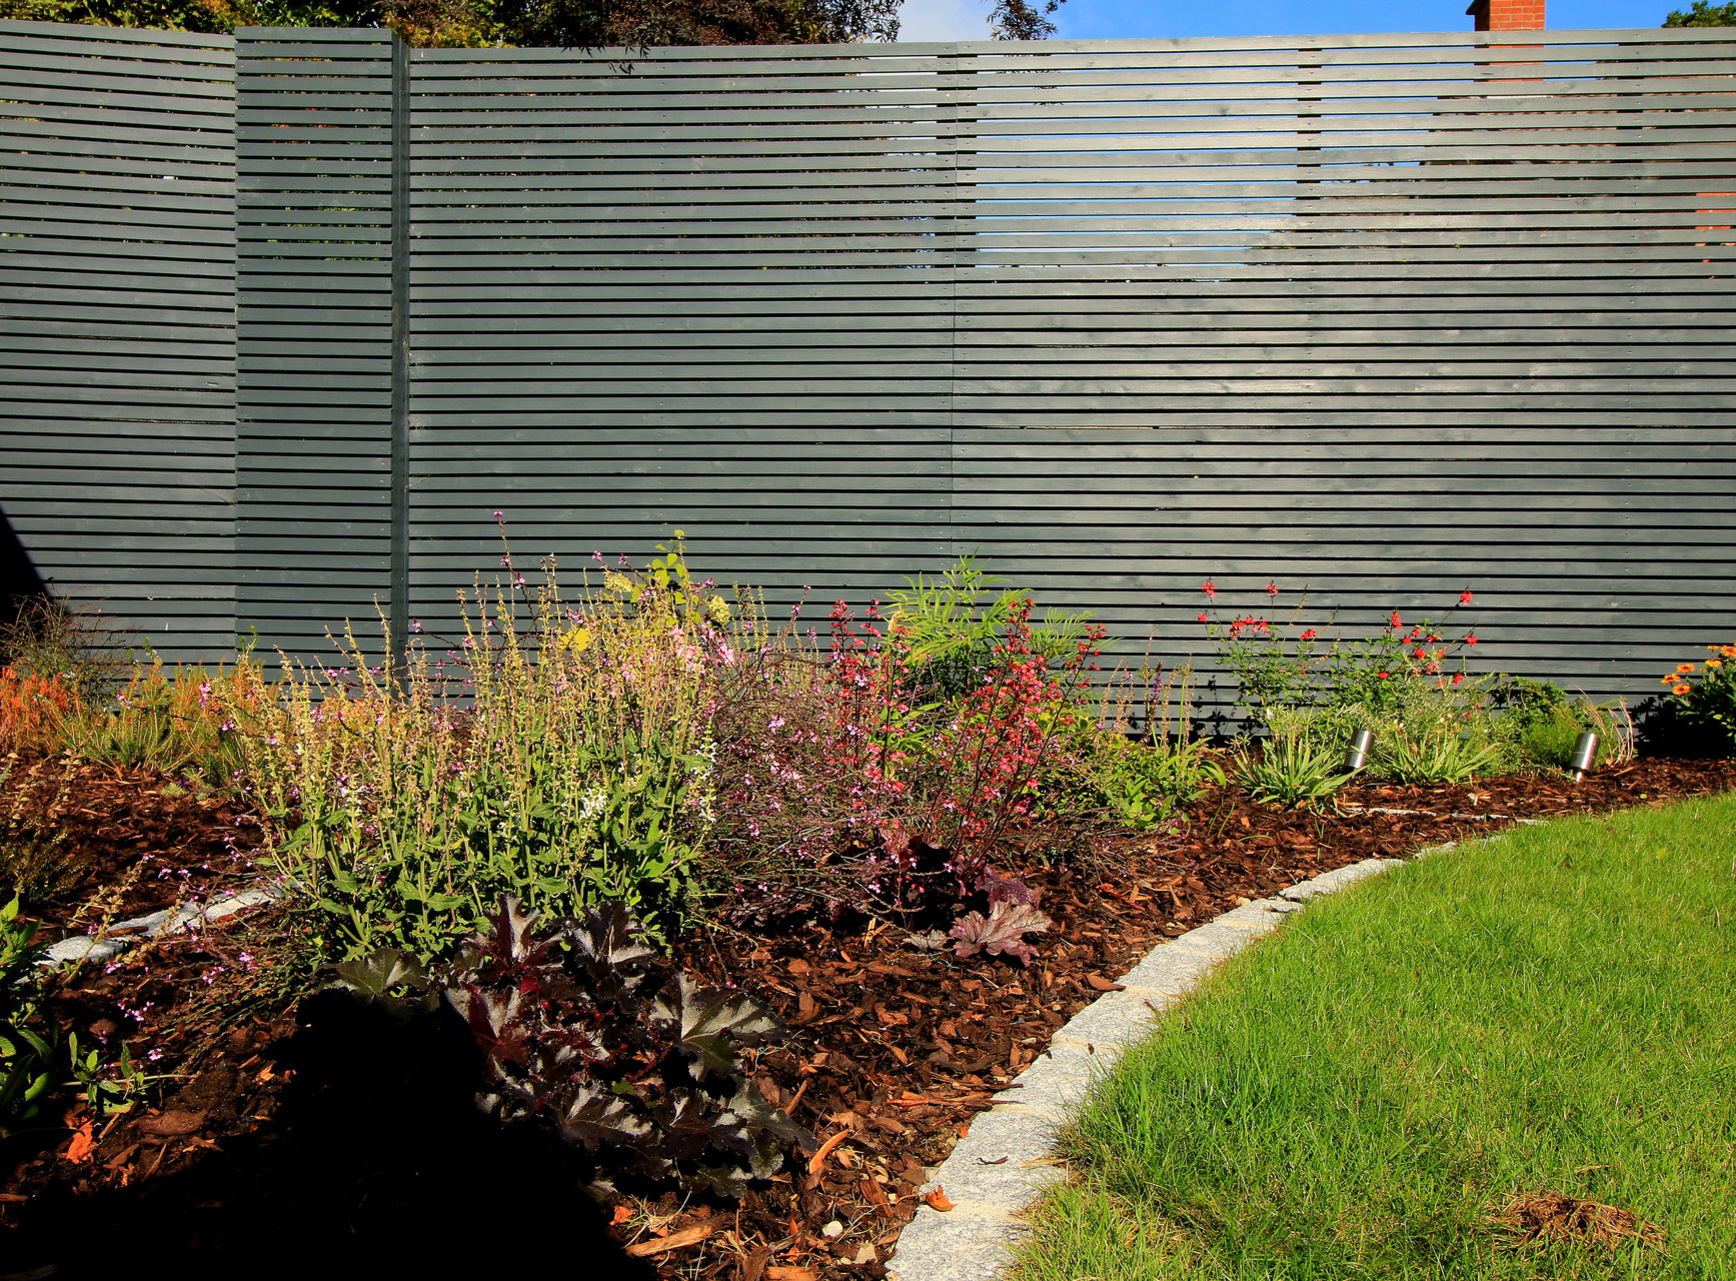 Horizontal Slatted Fence Design & Installation in Blackrock, Co Dublin | Contemporary Horizontal Slat Fencing | Custom made = Better made